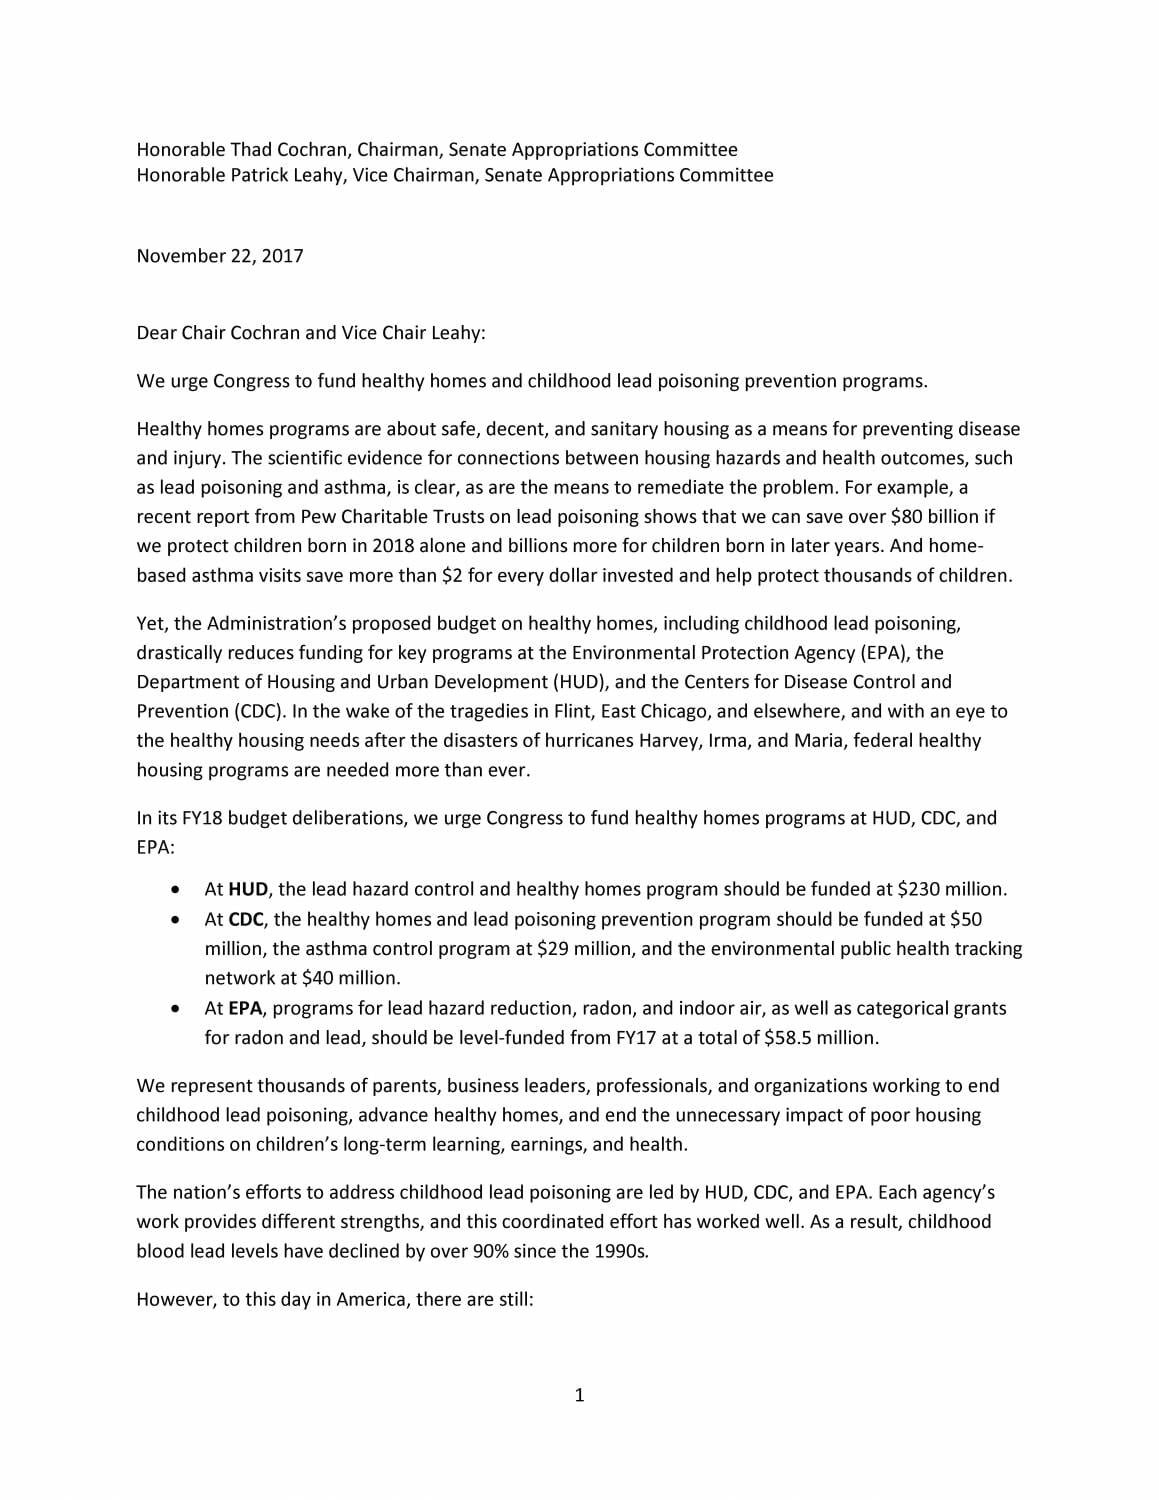 Senate Appropriations Letter, November 22, 2017